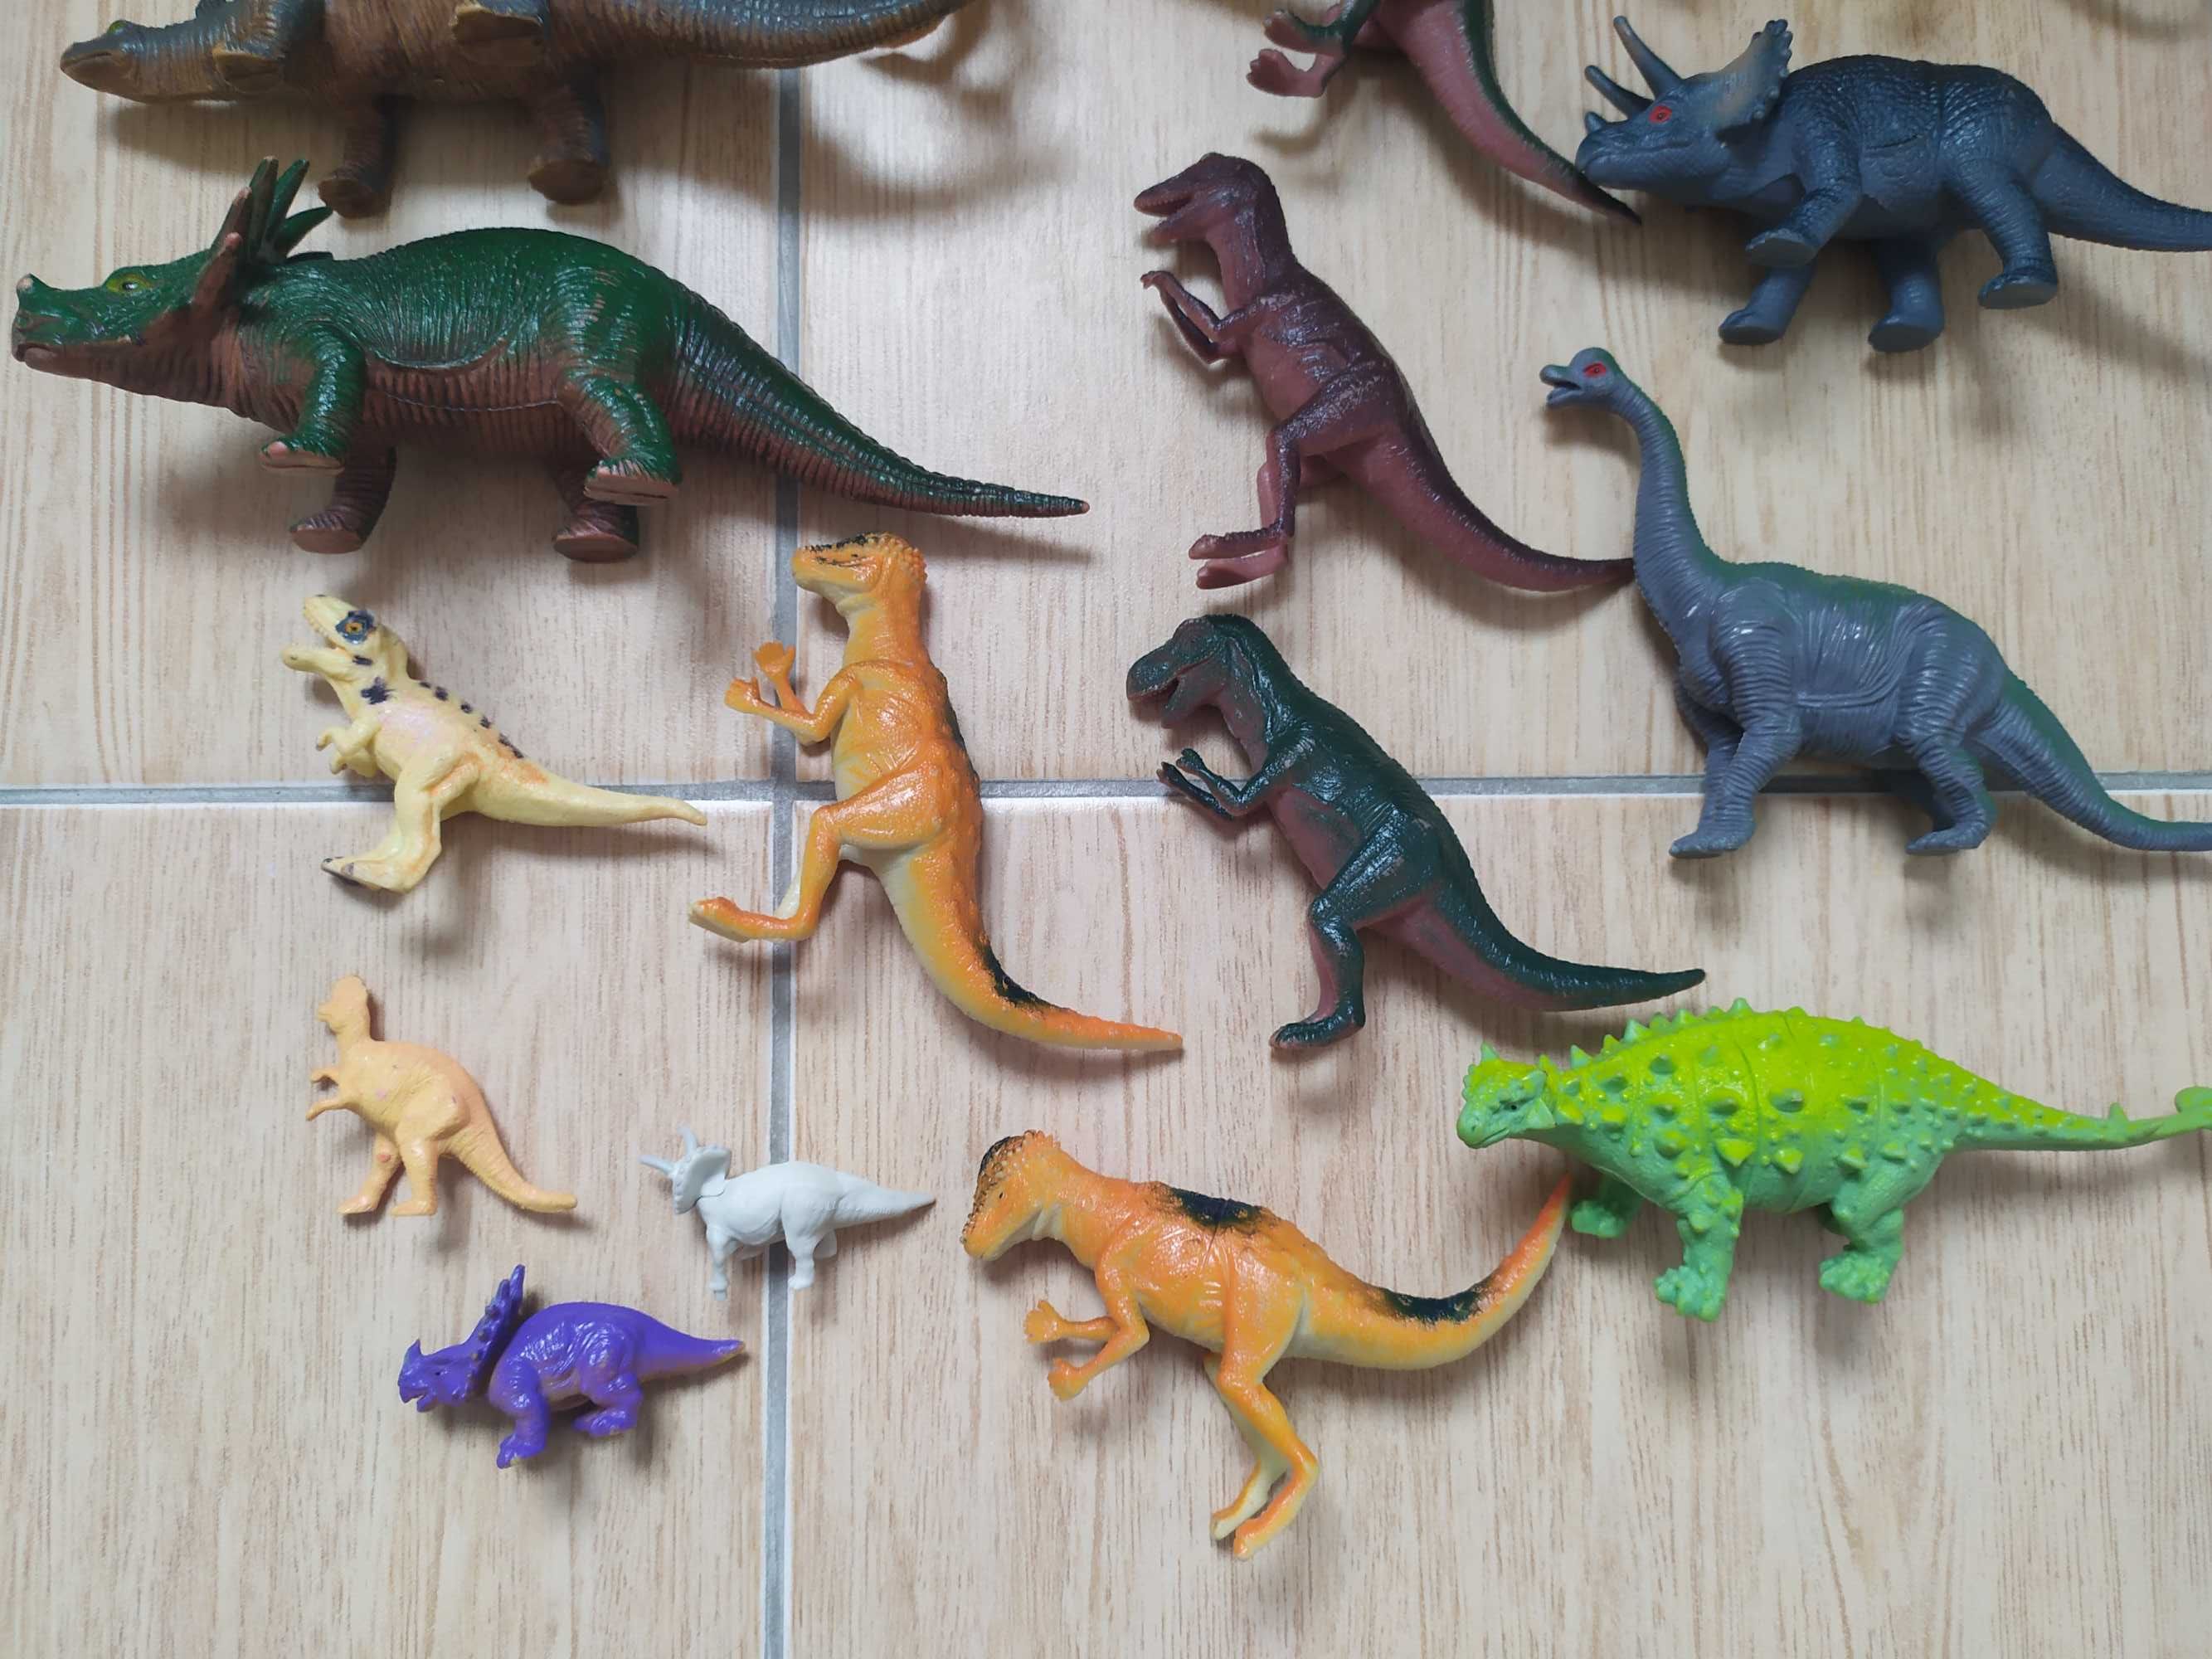 Zestaw figurek dinozaurów.